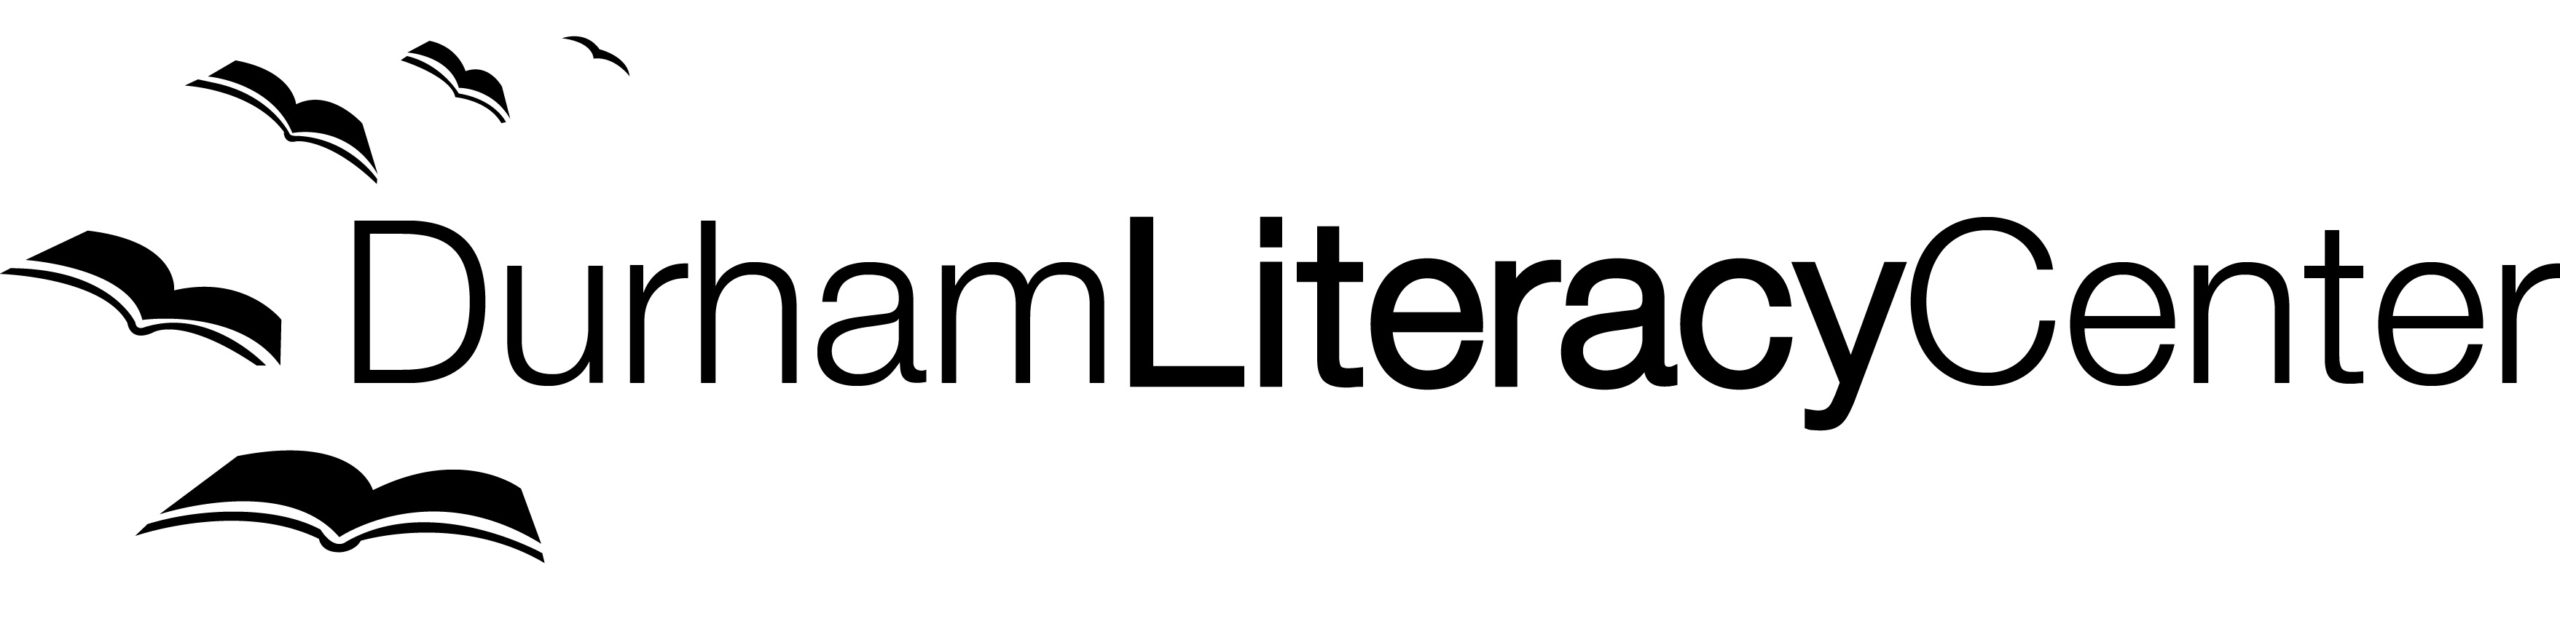 Durham Literacy Center logo with five open books